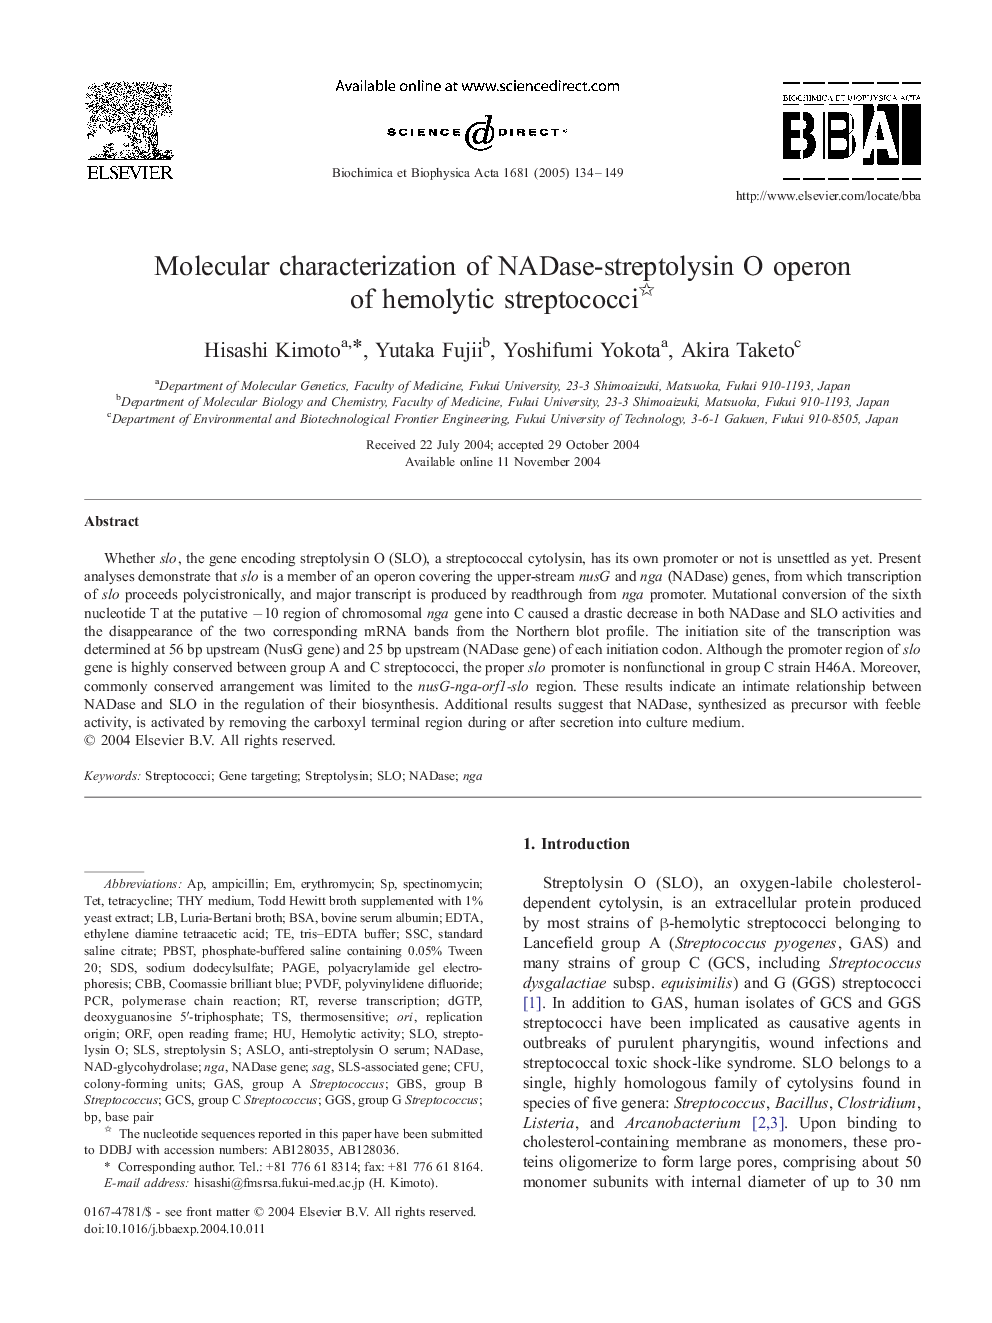 Molecular characterization of NADase-streptolysin O operon of hemolytic streptococci